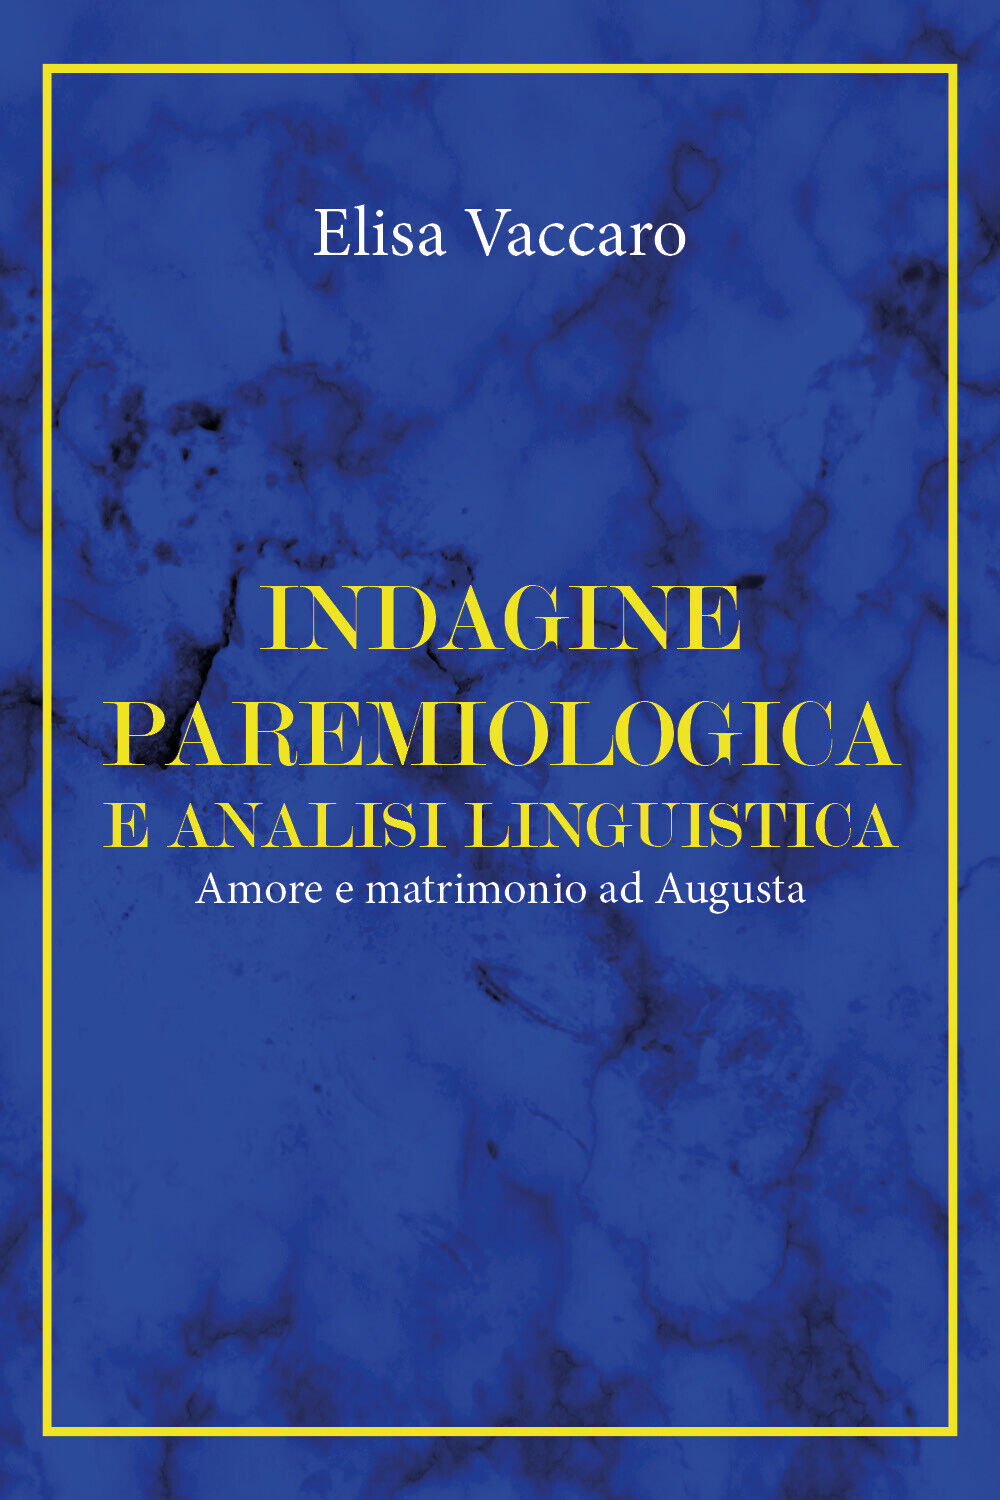 Indagine paremiologica e analisi linguistica -  Elisa Vaccaro,  2019,  Youcanpri